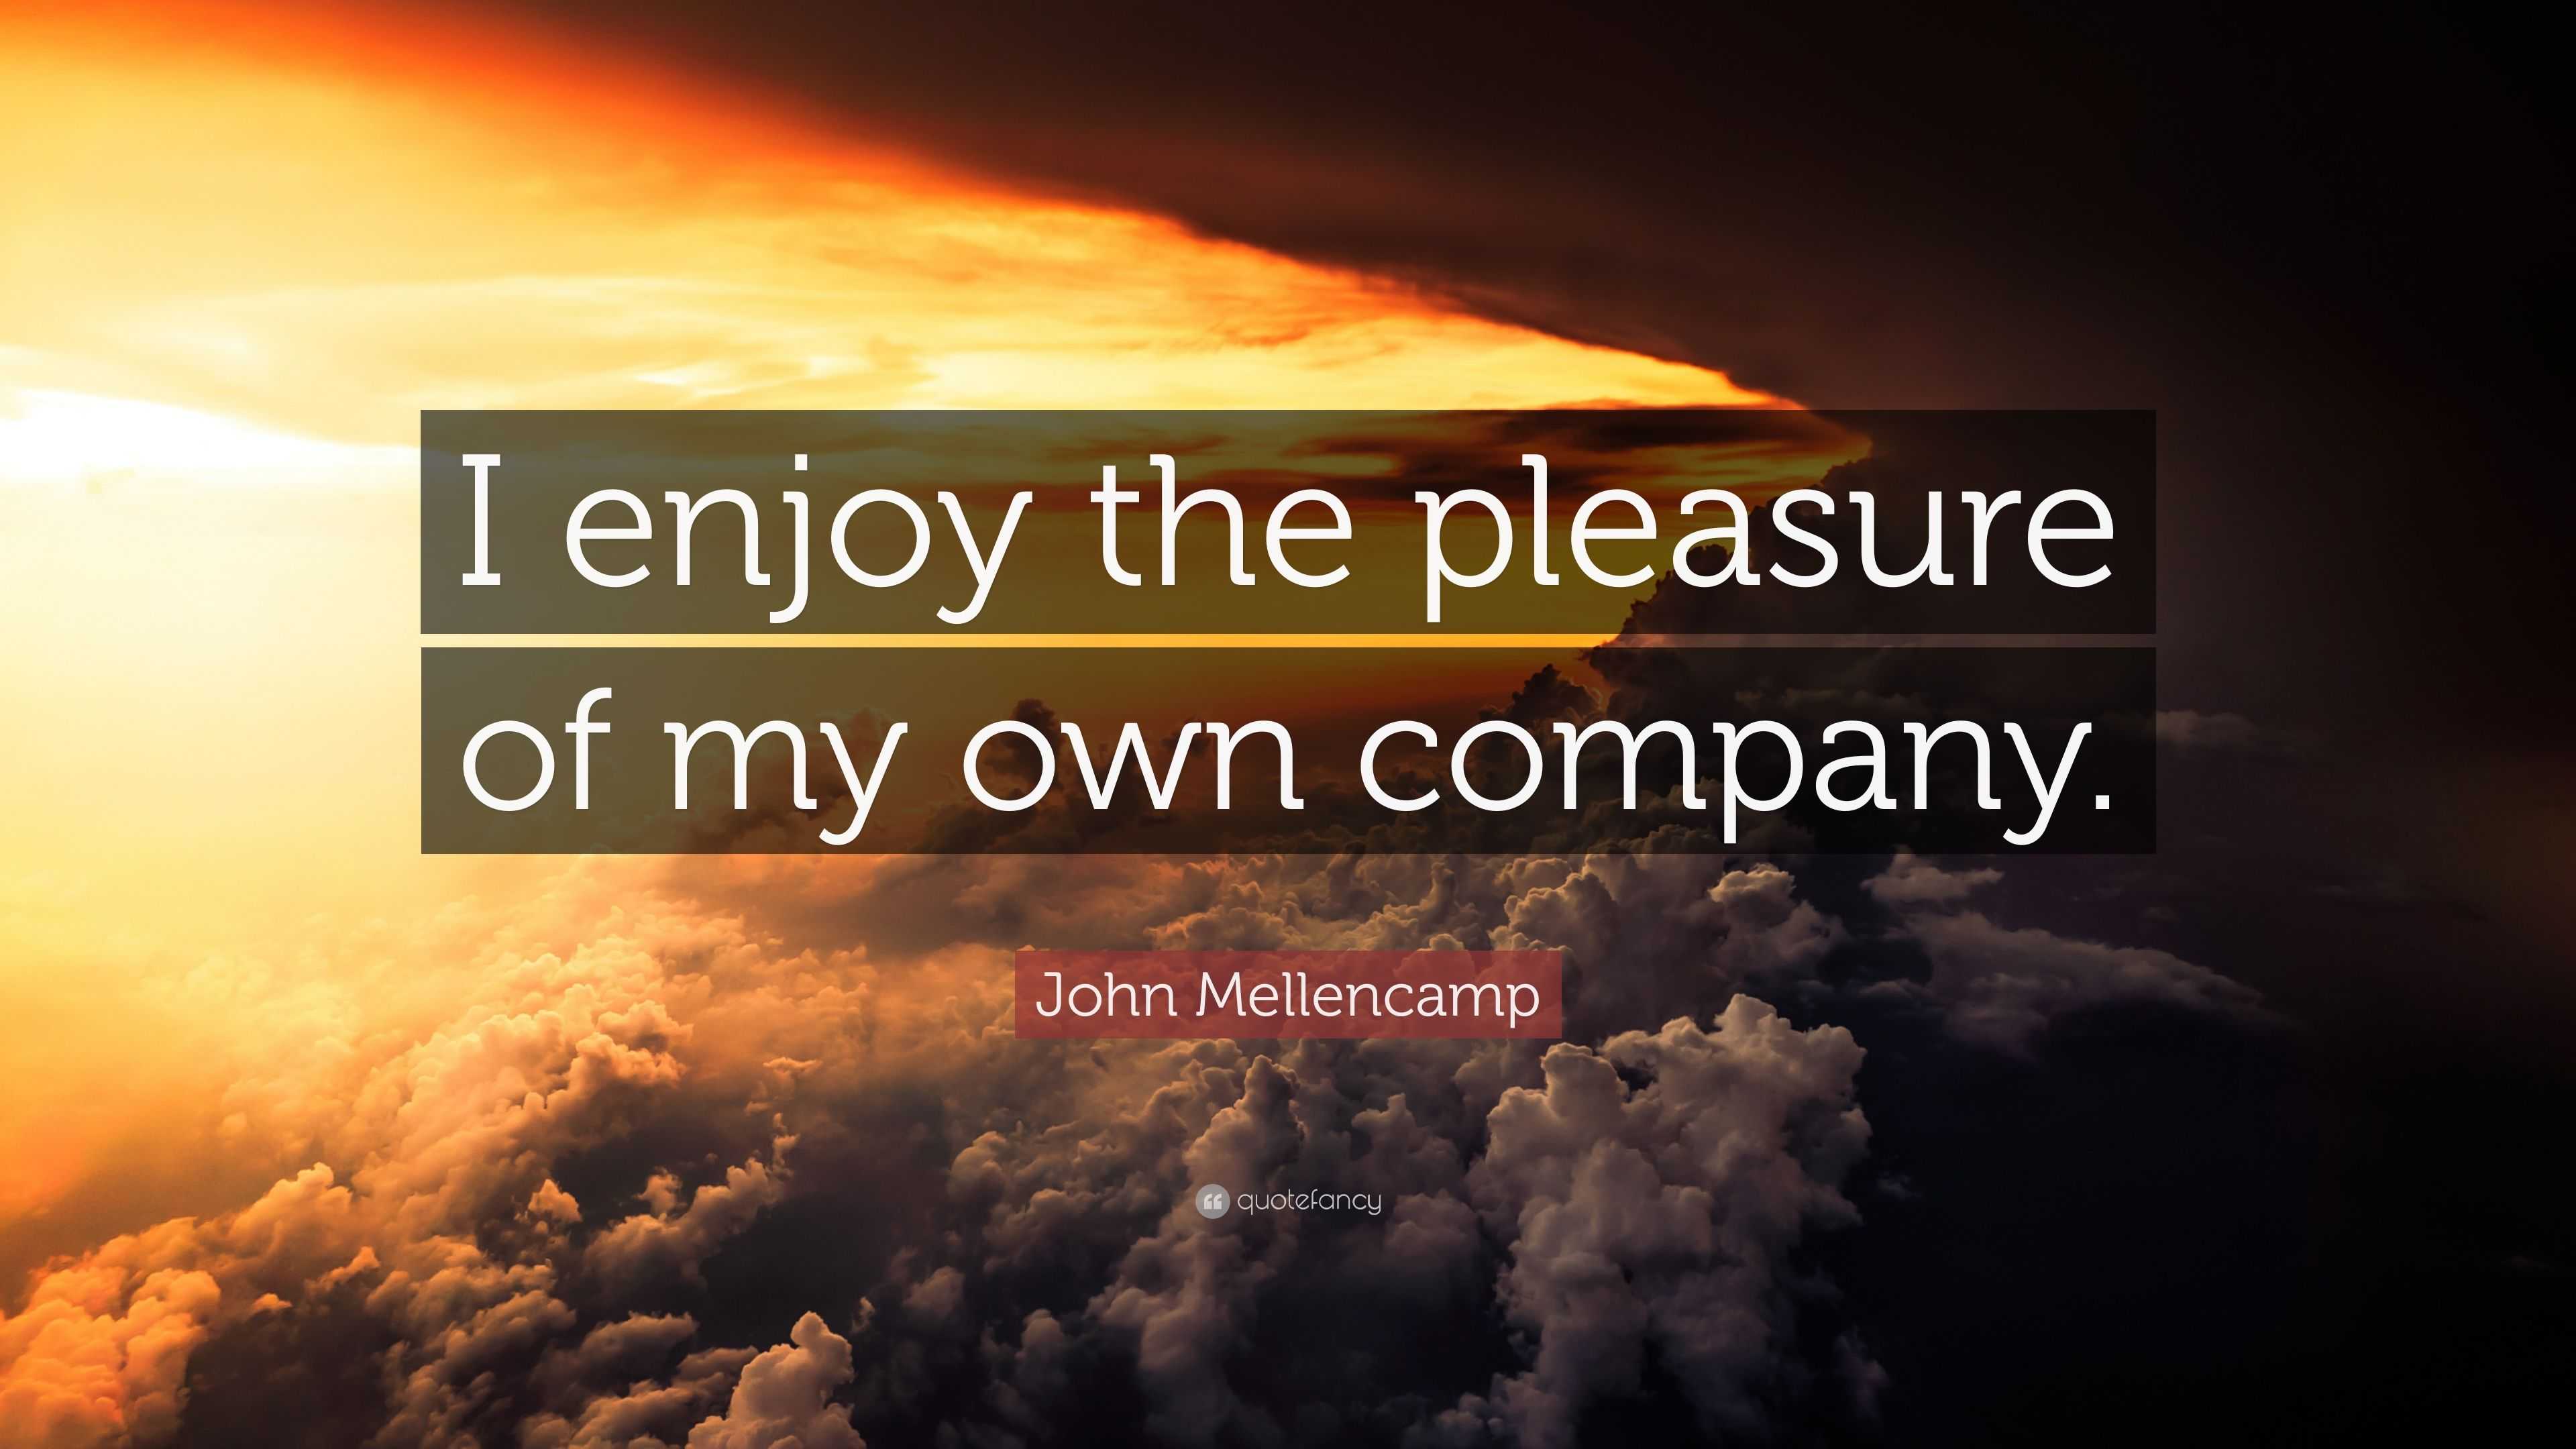 John Mellencamp Quote: “I Enjoy The Pleasure Of My Own Company.”